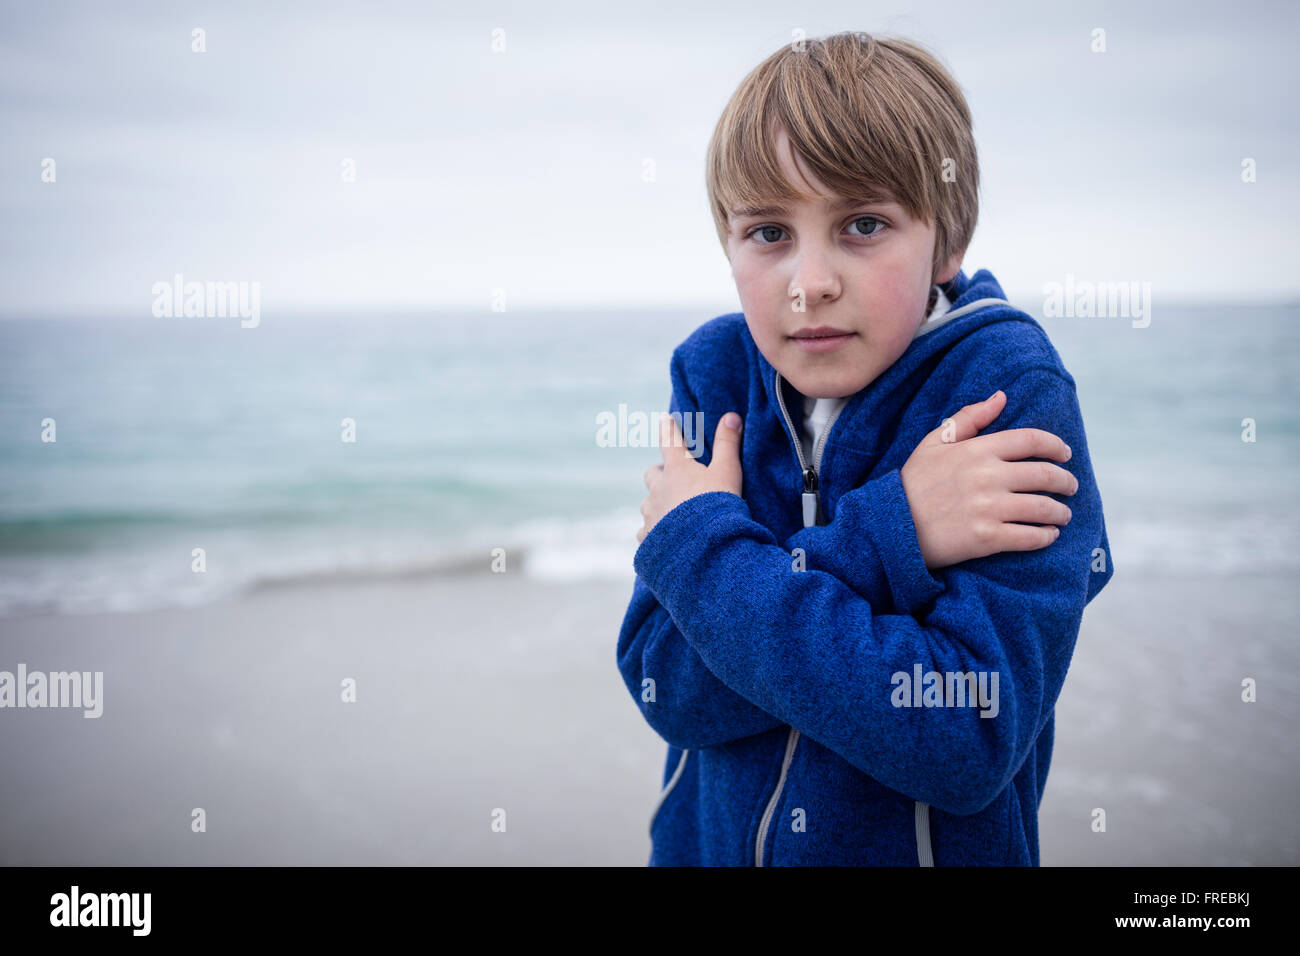 Portrait of boy in blue jacket feeling cold Stock Photo